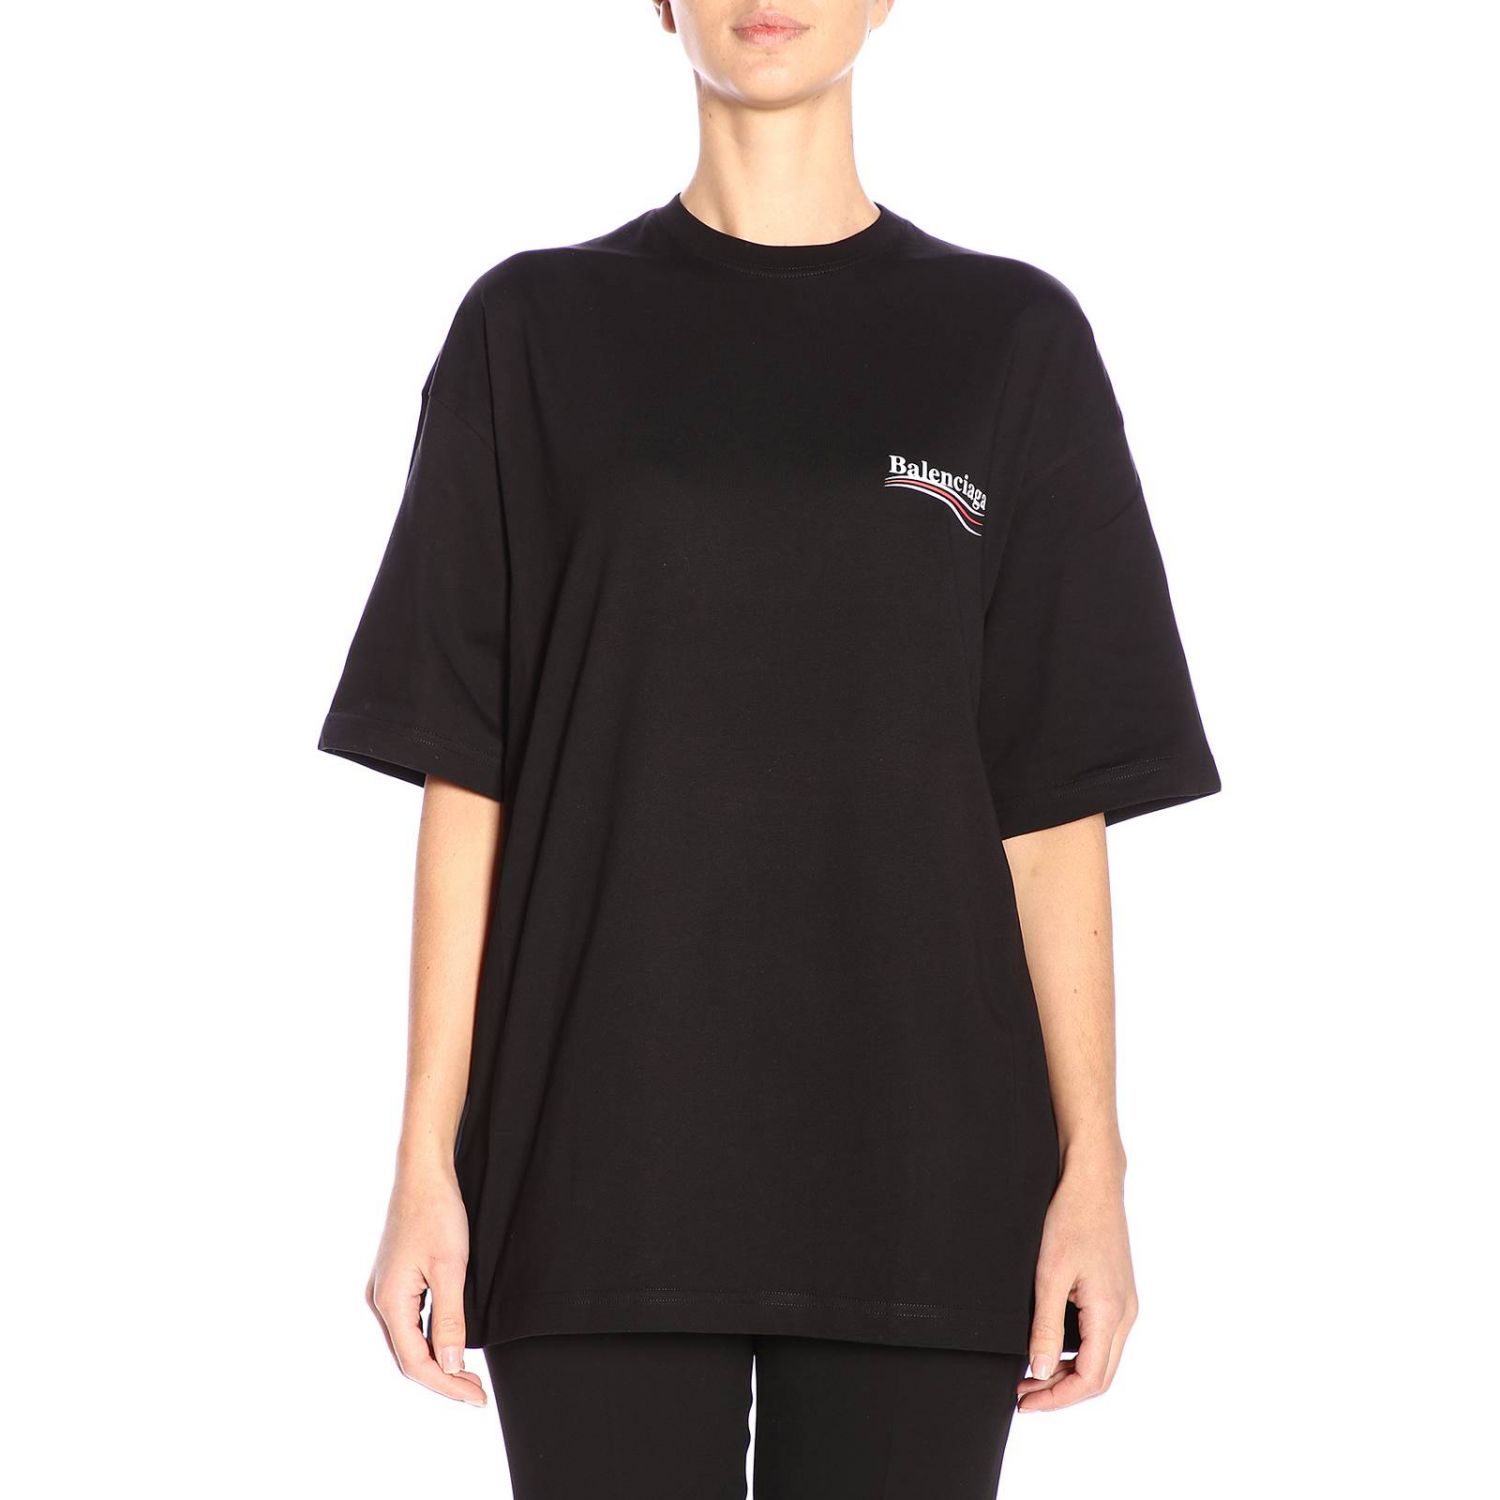 Balenciaga Outlet: T-shirt women | T-Shirt Balenciaga Women Black | T ...